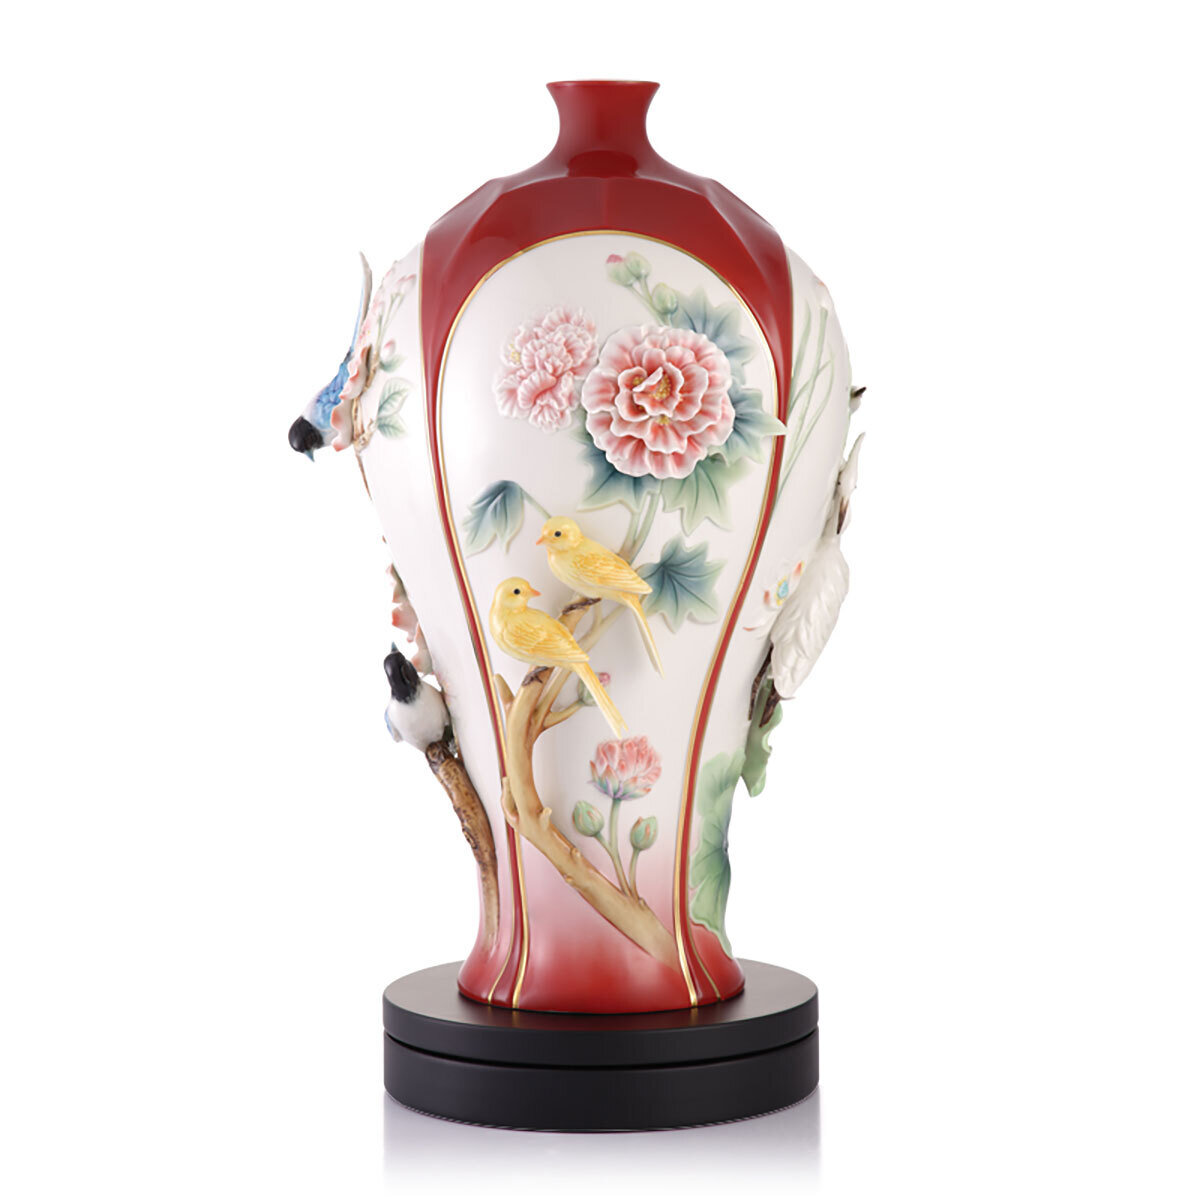 Franz Porcelain Blessings,Wealth,Longevity And Happiness Design Sculptured Porcelain Vase With Wooden Base FZ03301